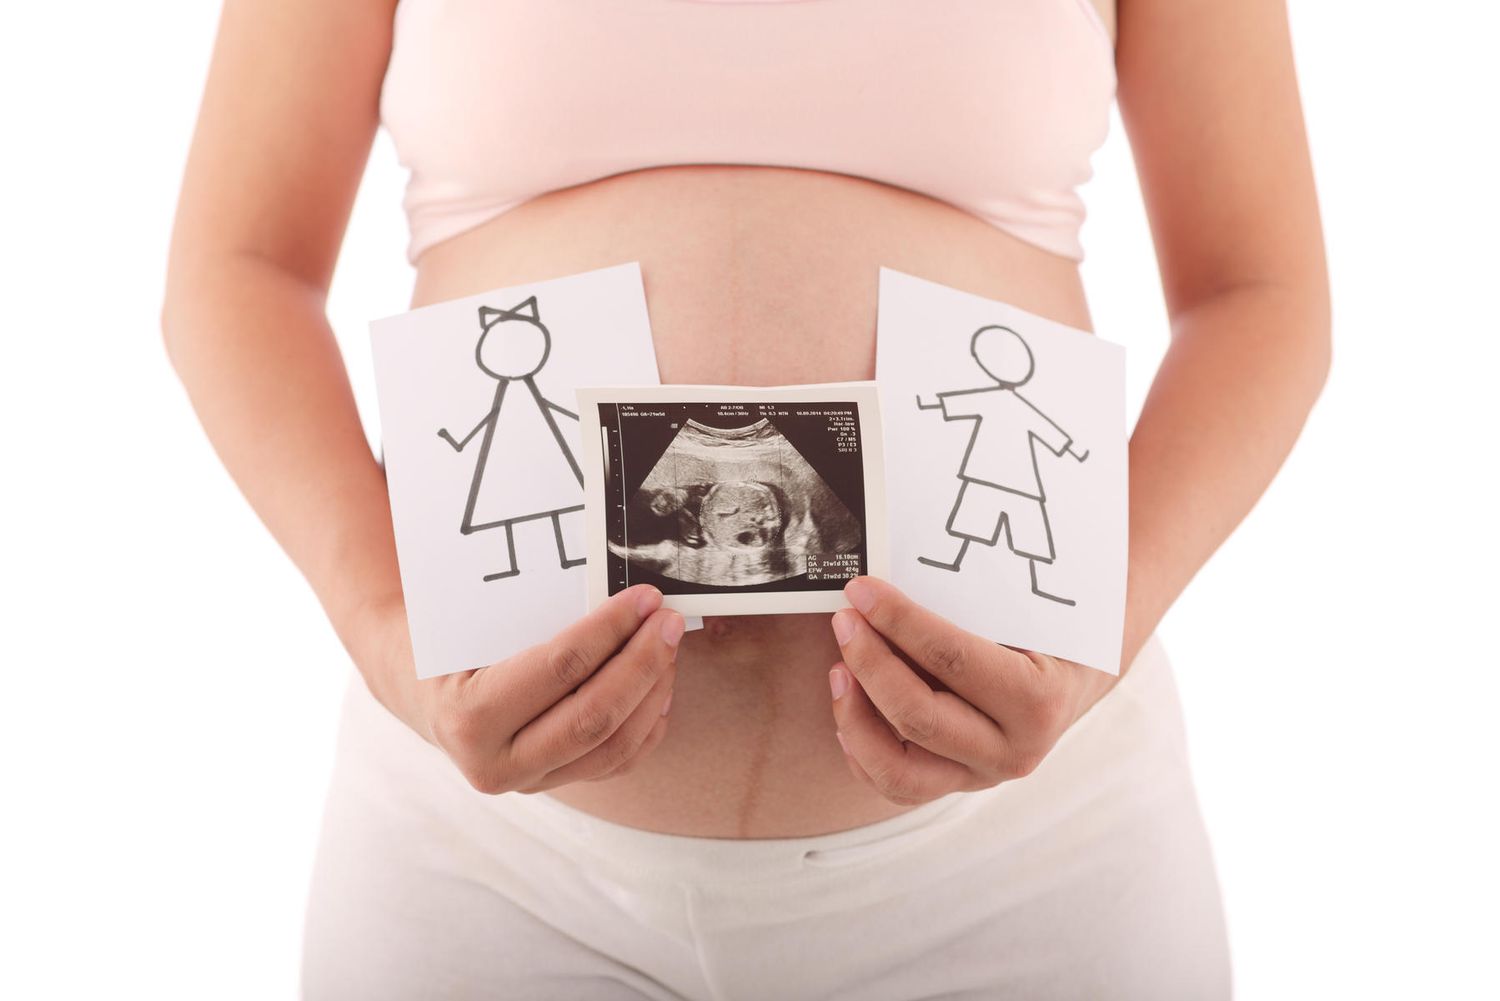 gender images next to ultrasound